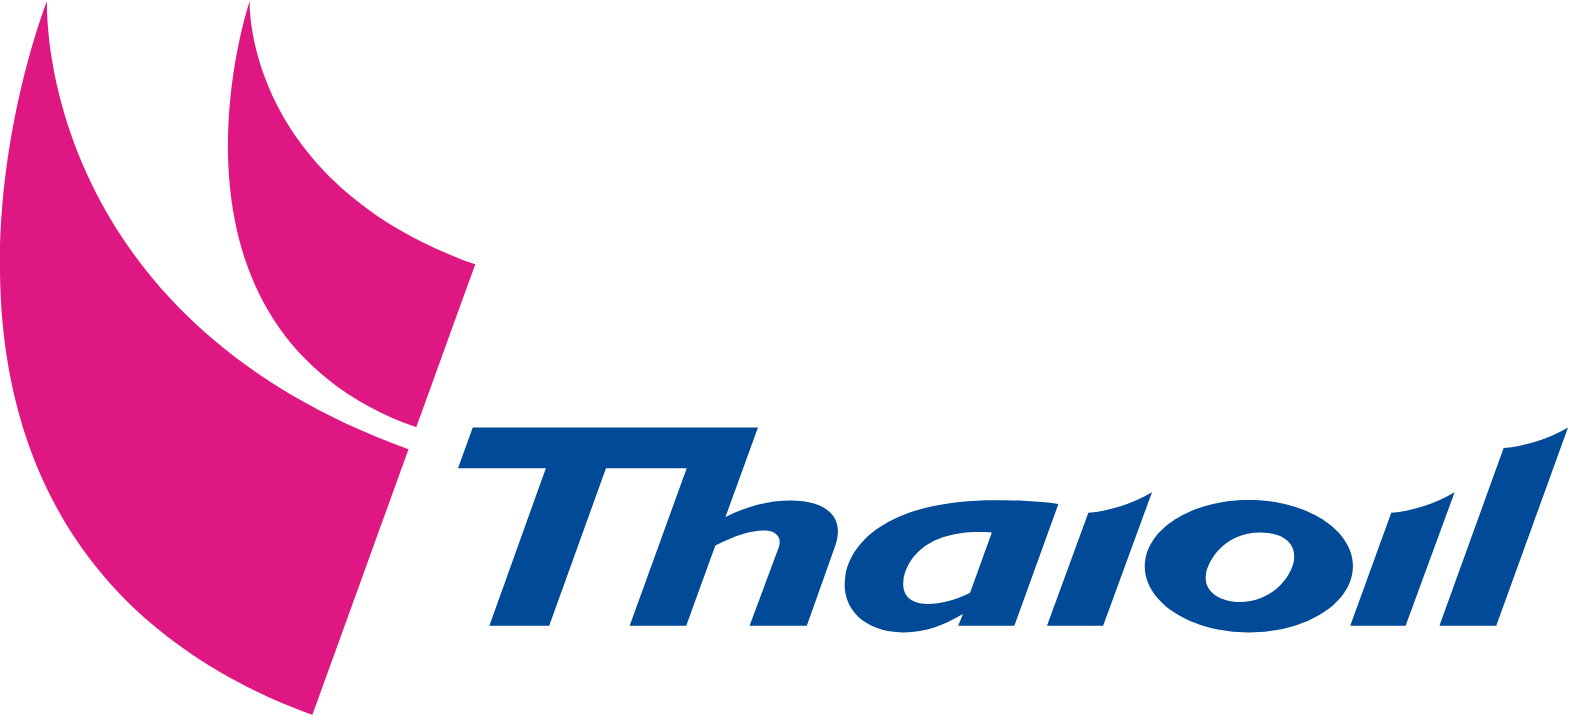 Thai Oil logo large (transparent PNG)